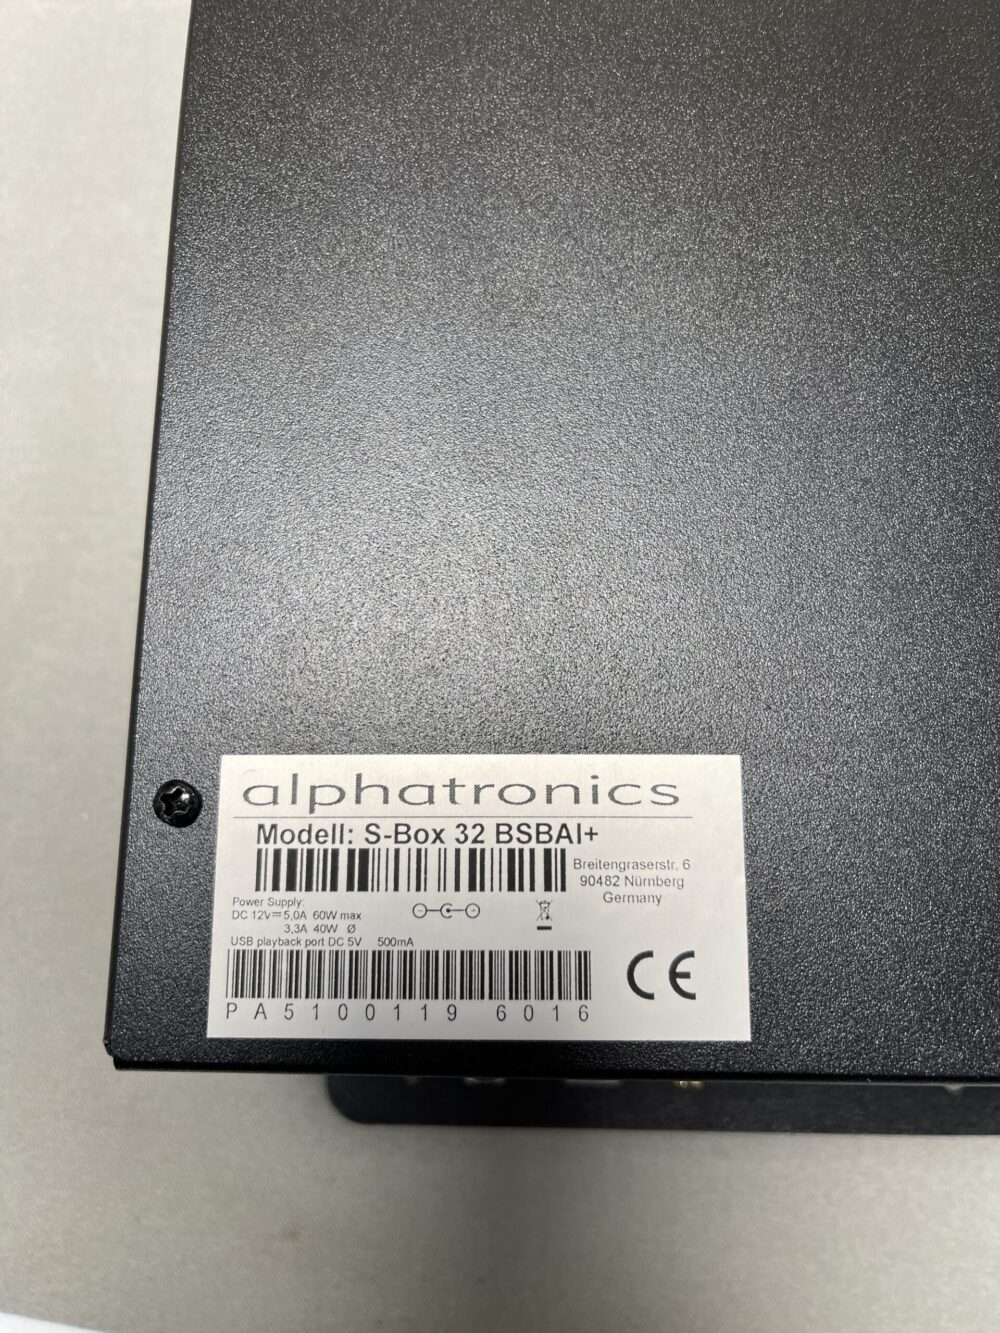 Alphatronics S-Box 32" BSBAI+